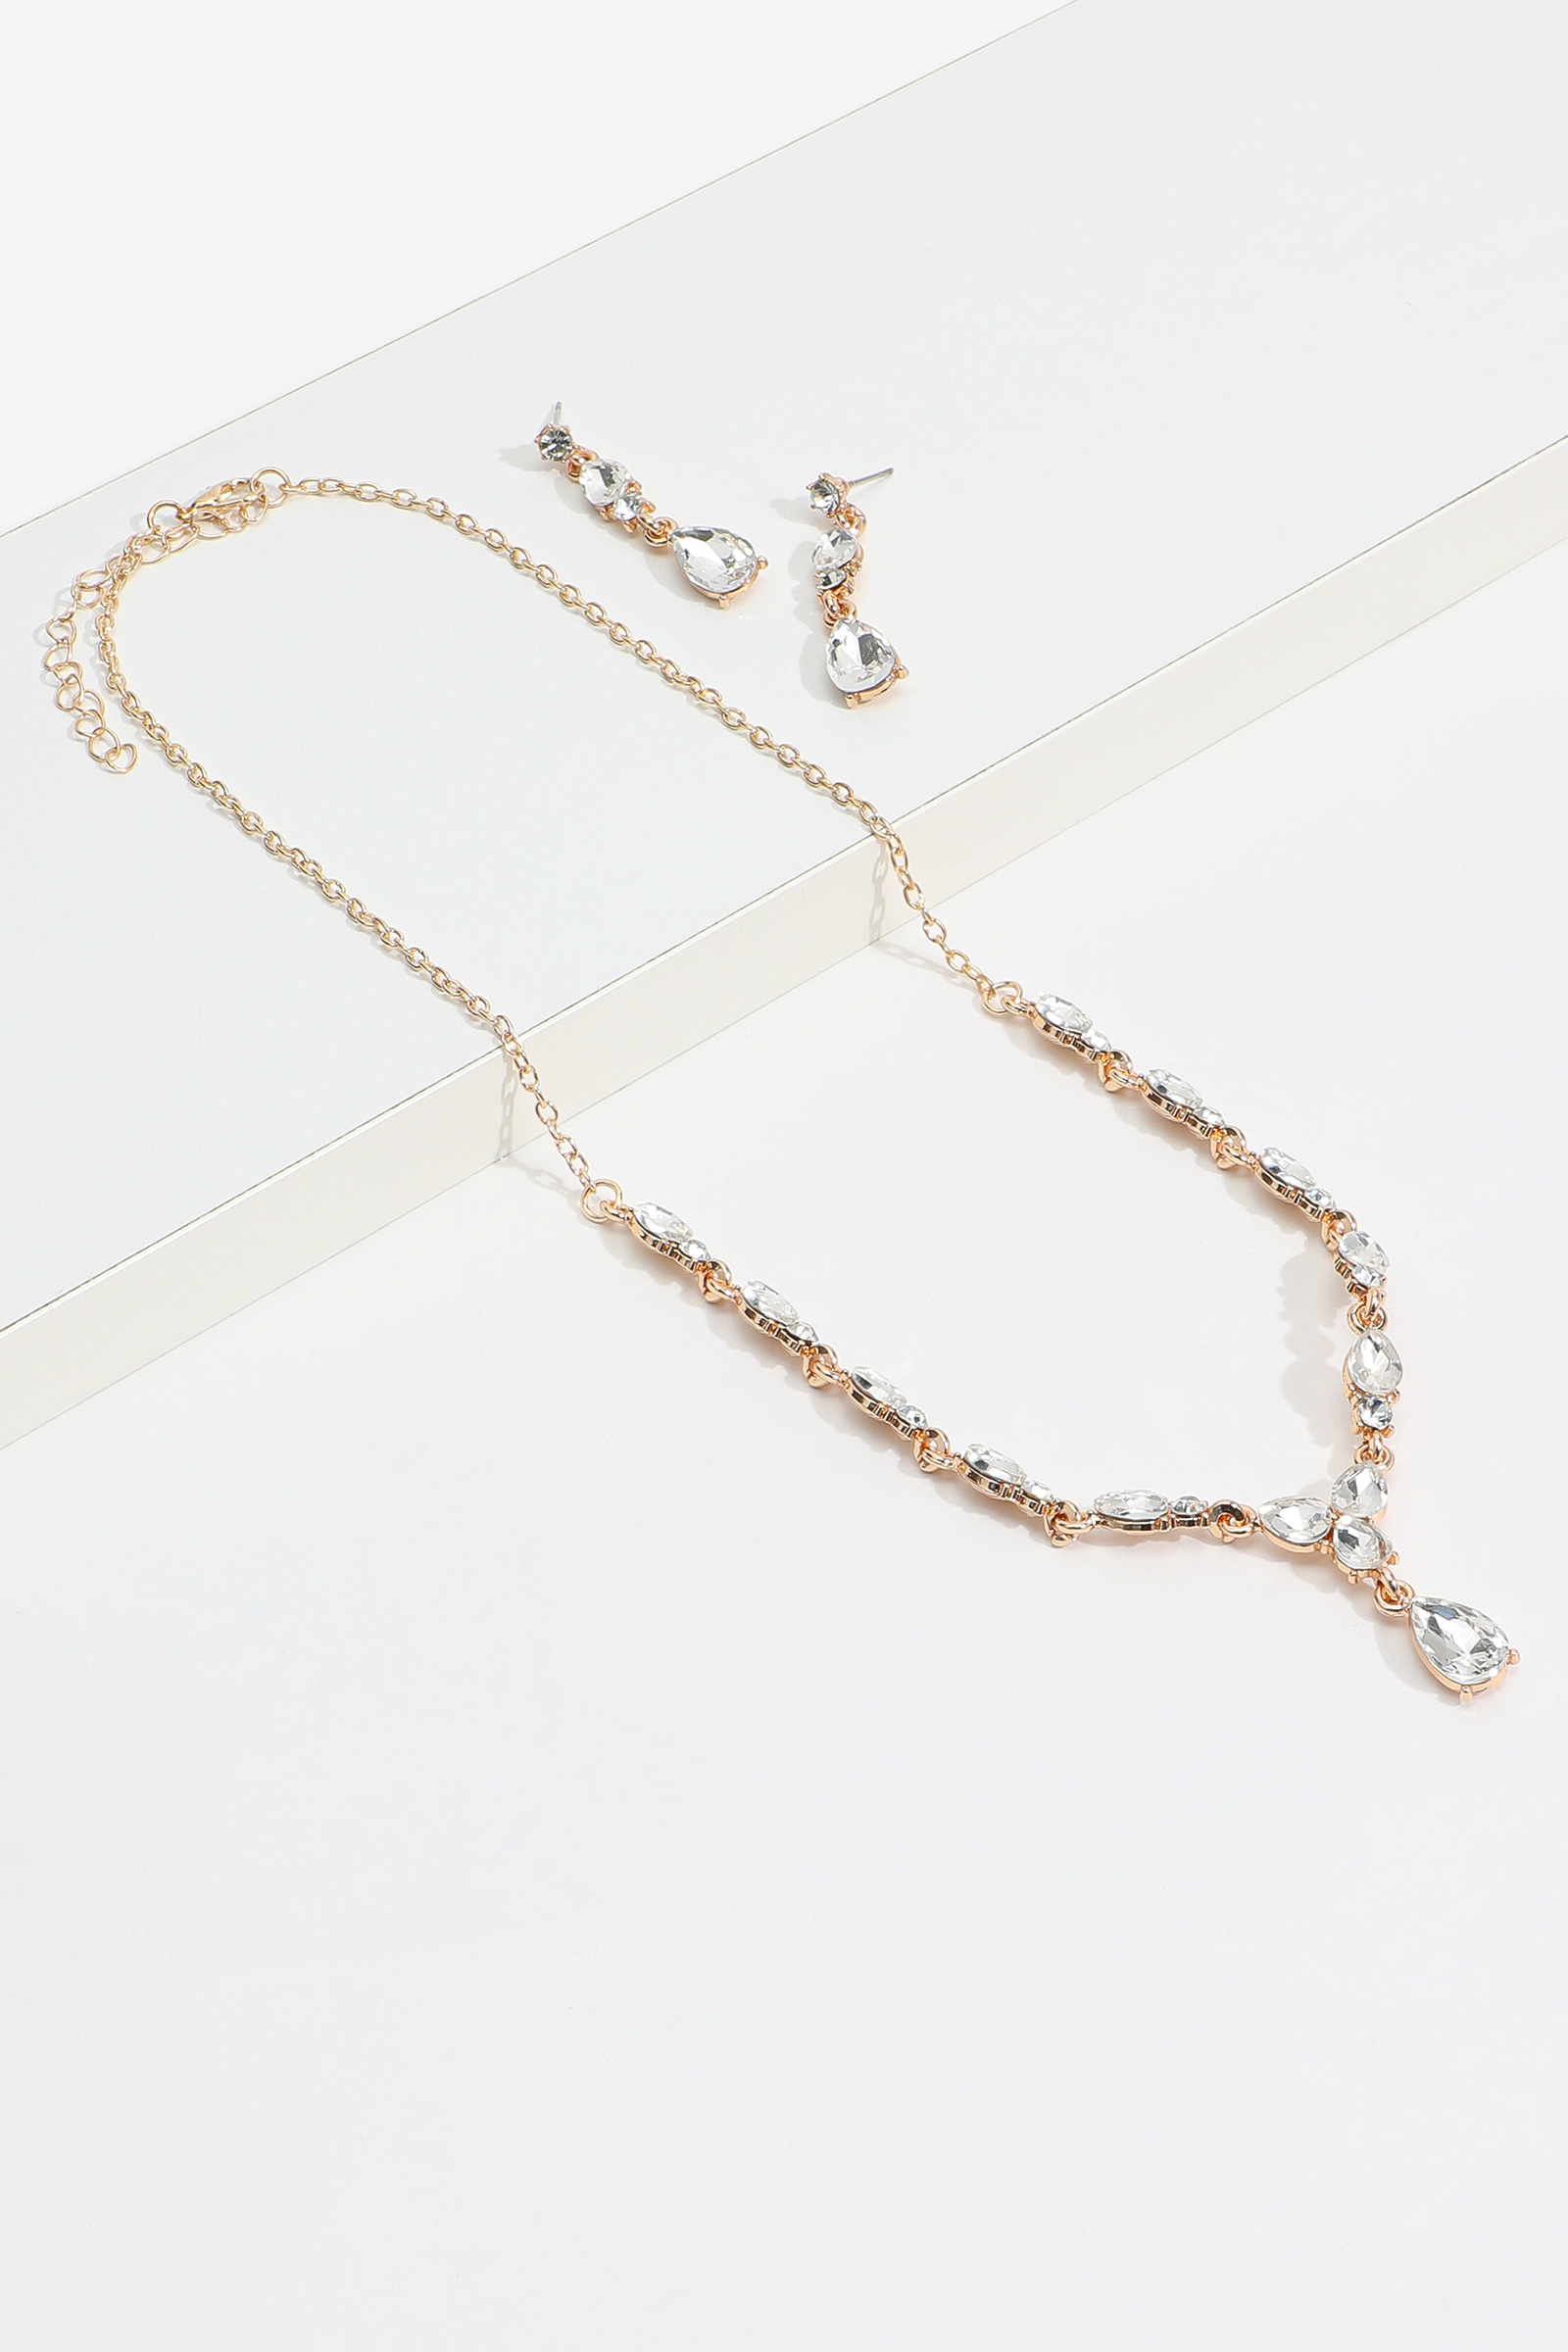 Ardene Gemstone Necklace & Earring Set in Gold | Stainless Steel